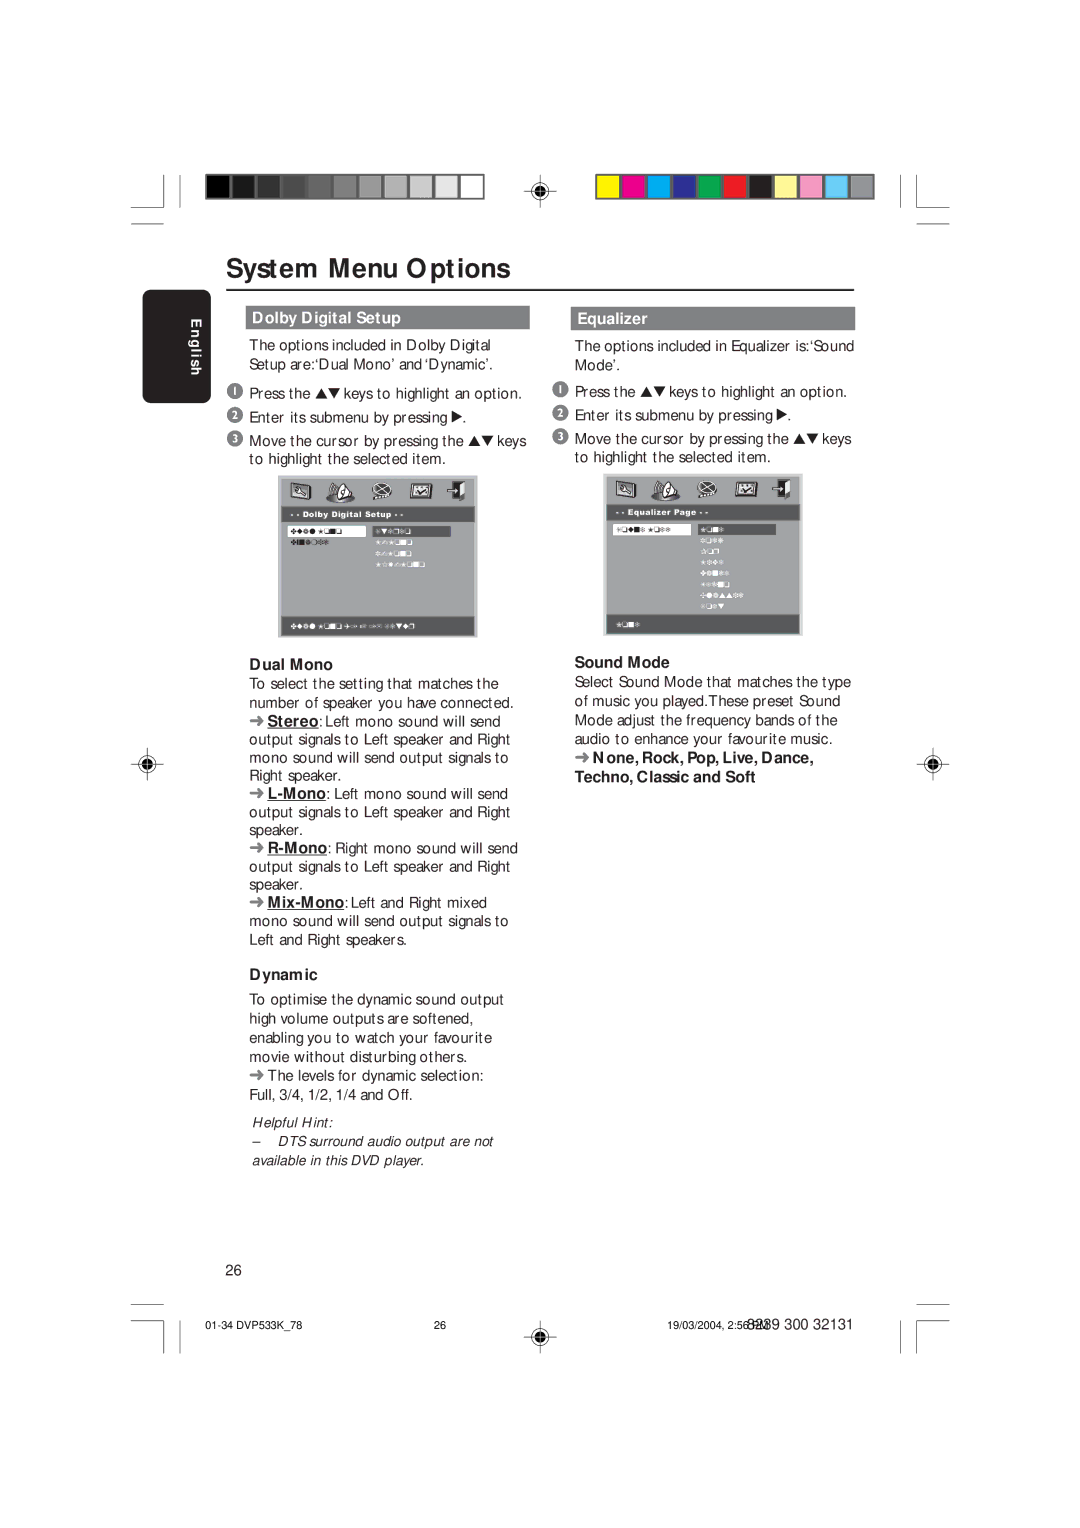 Philips DVP533K/78 manual Dolby Digital Setup Equalizer, Dual Mono, Dynamic, Sound Mode 